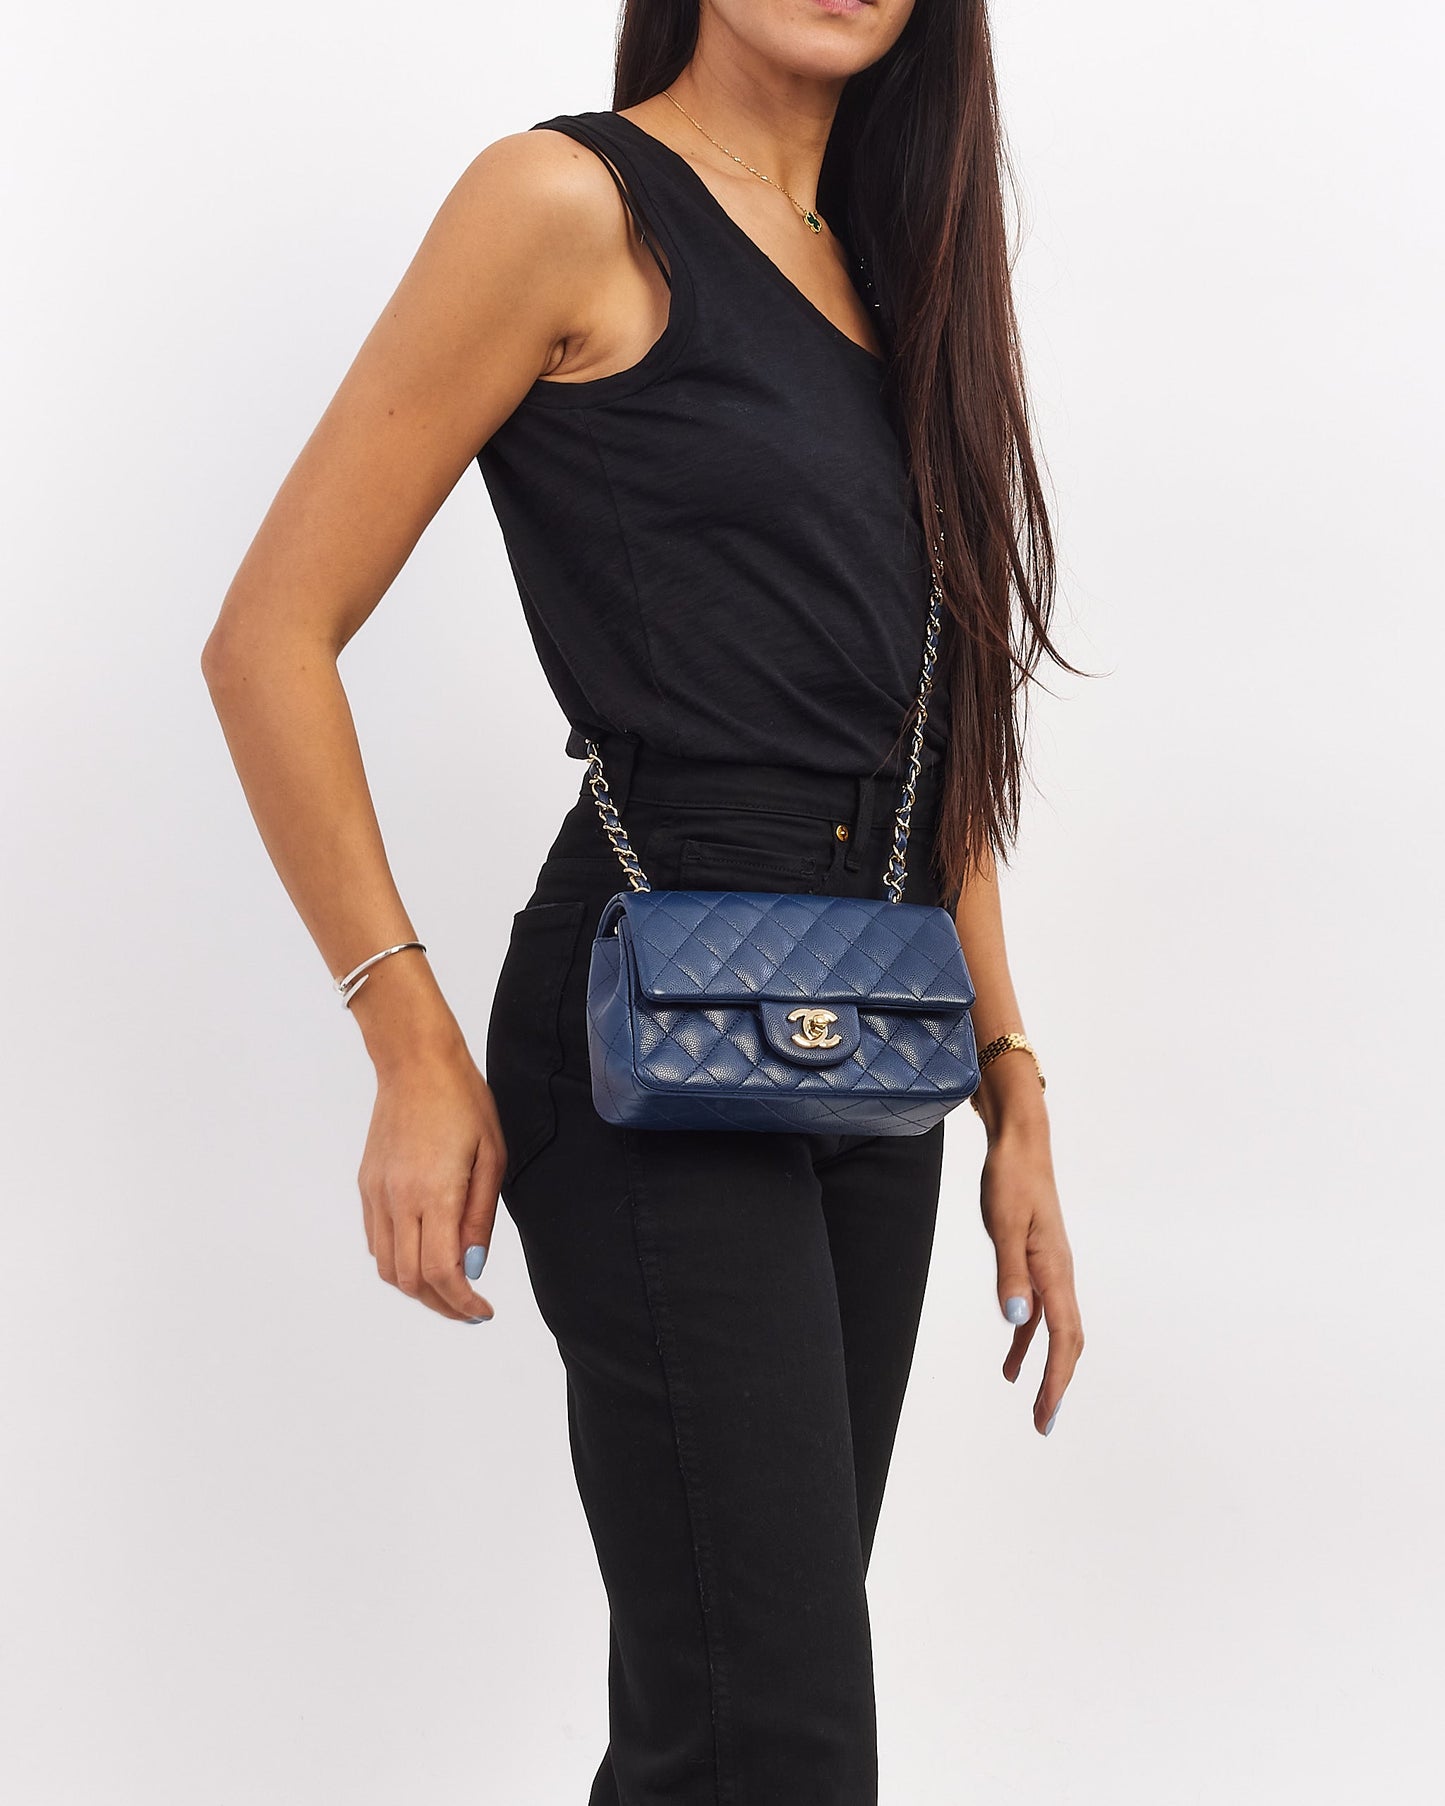 Chanel Navy Blue Caviar Leather Mini Classic Rectangular Flap Bag